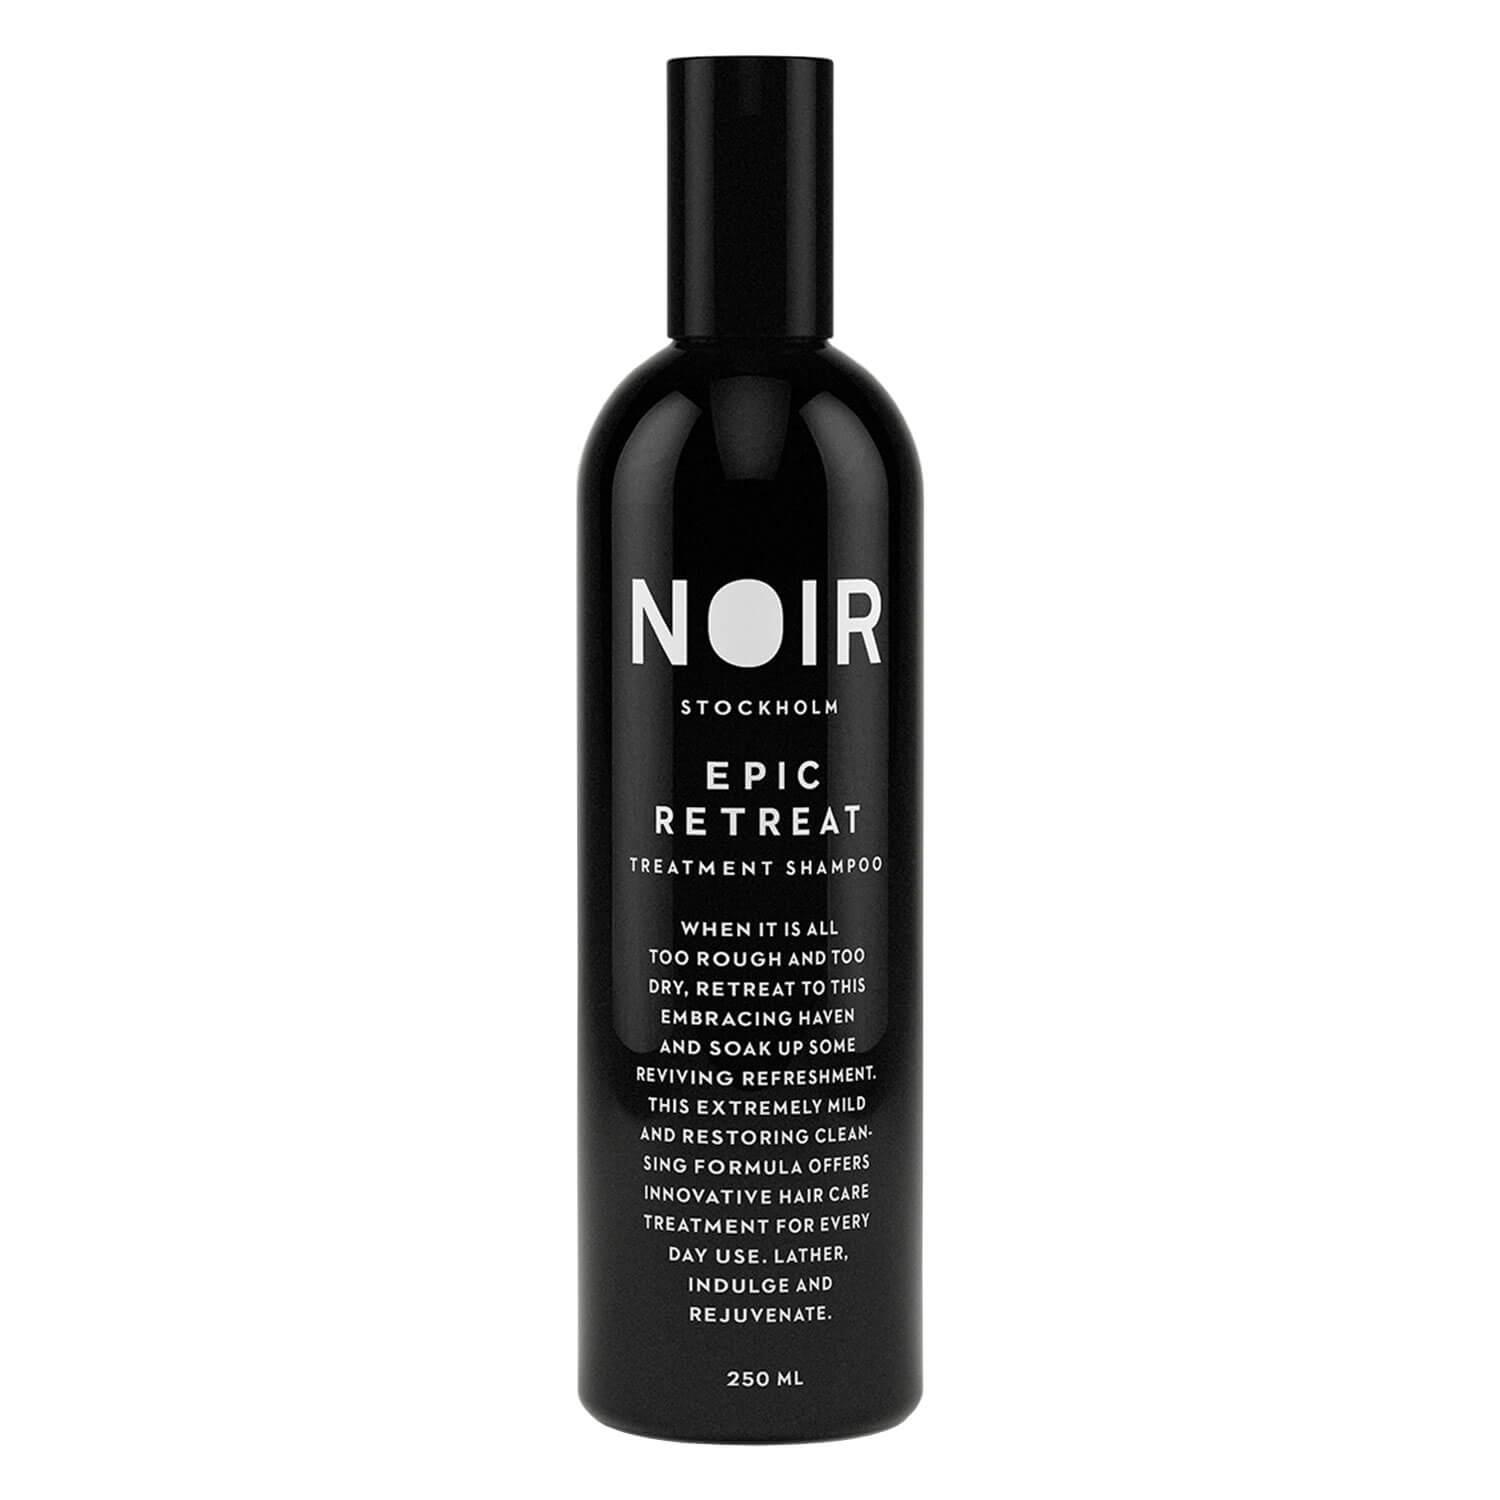 NOIR - Epic Retreat Treatment Shampoo